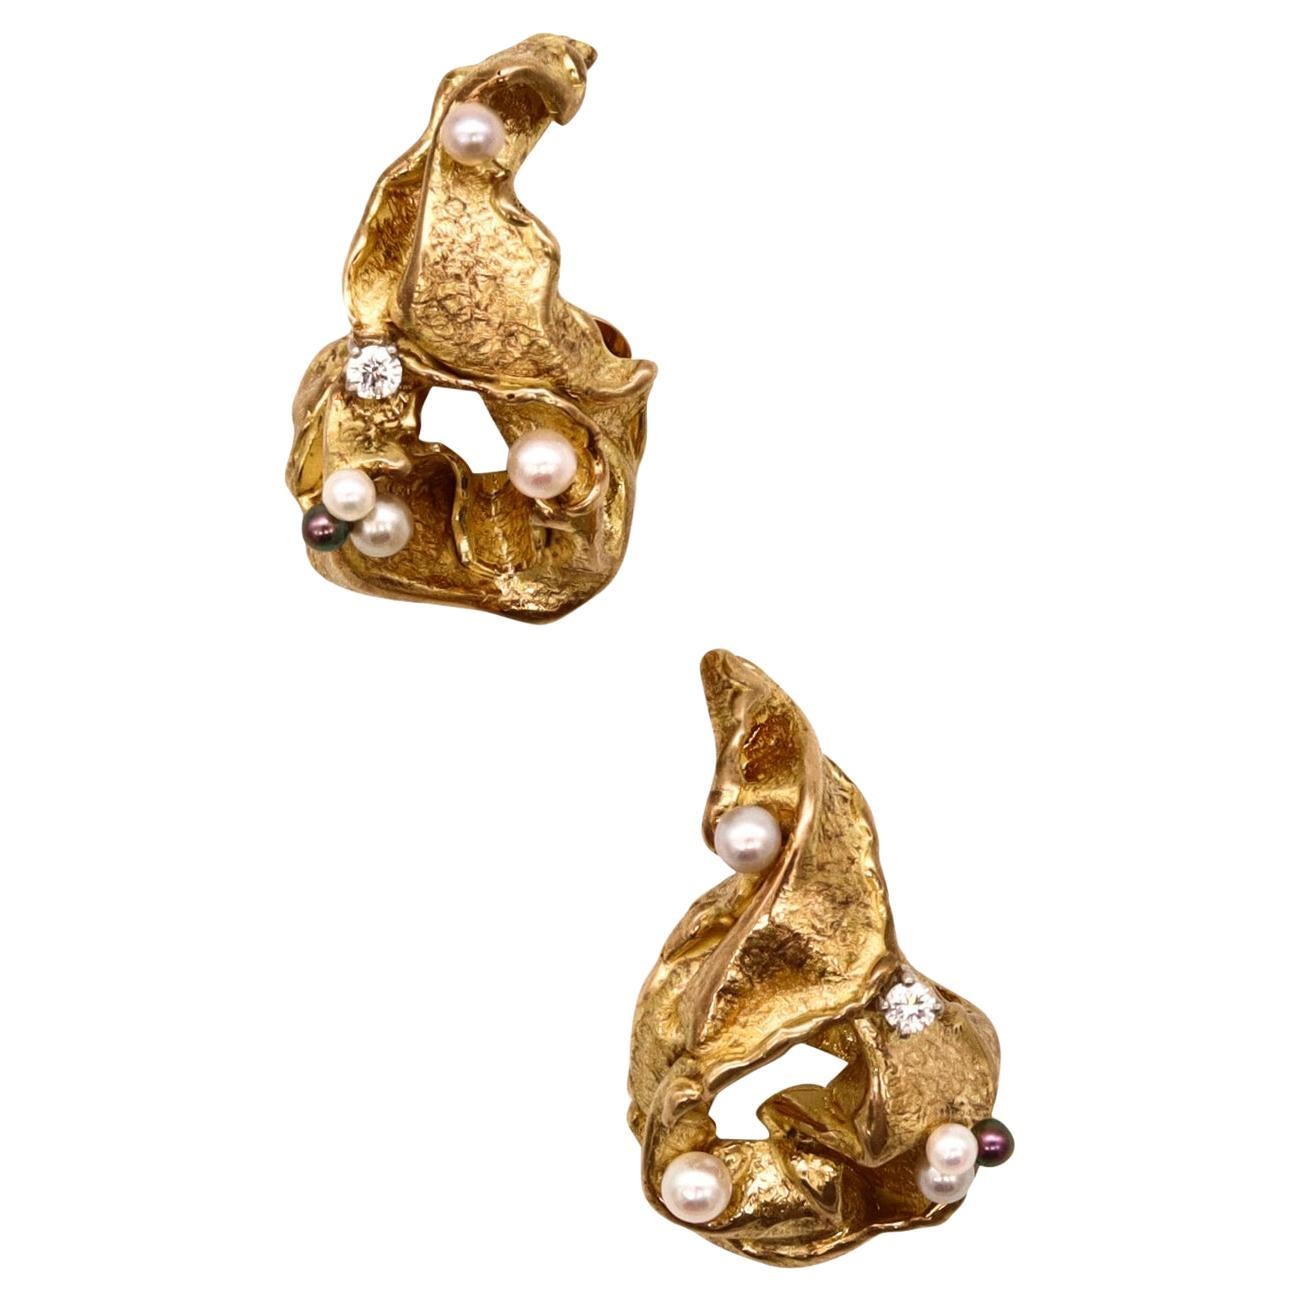 Gilbert Albert 1970 Swiss Modernist Clip Earrings In 18Kt Yellow Gold With Pearl